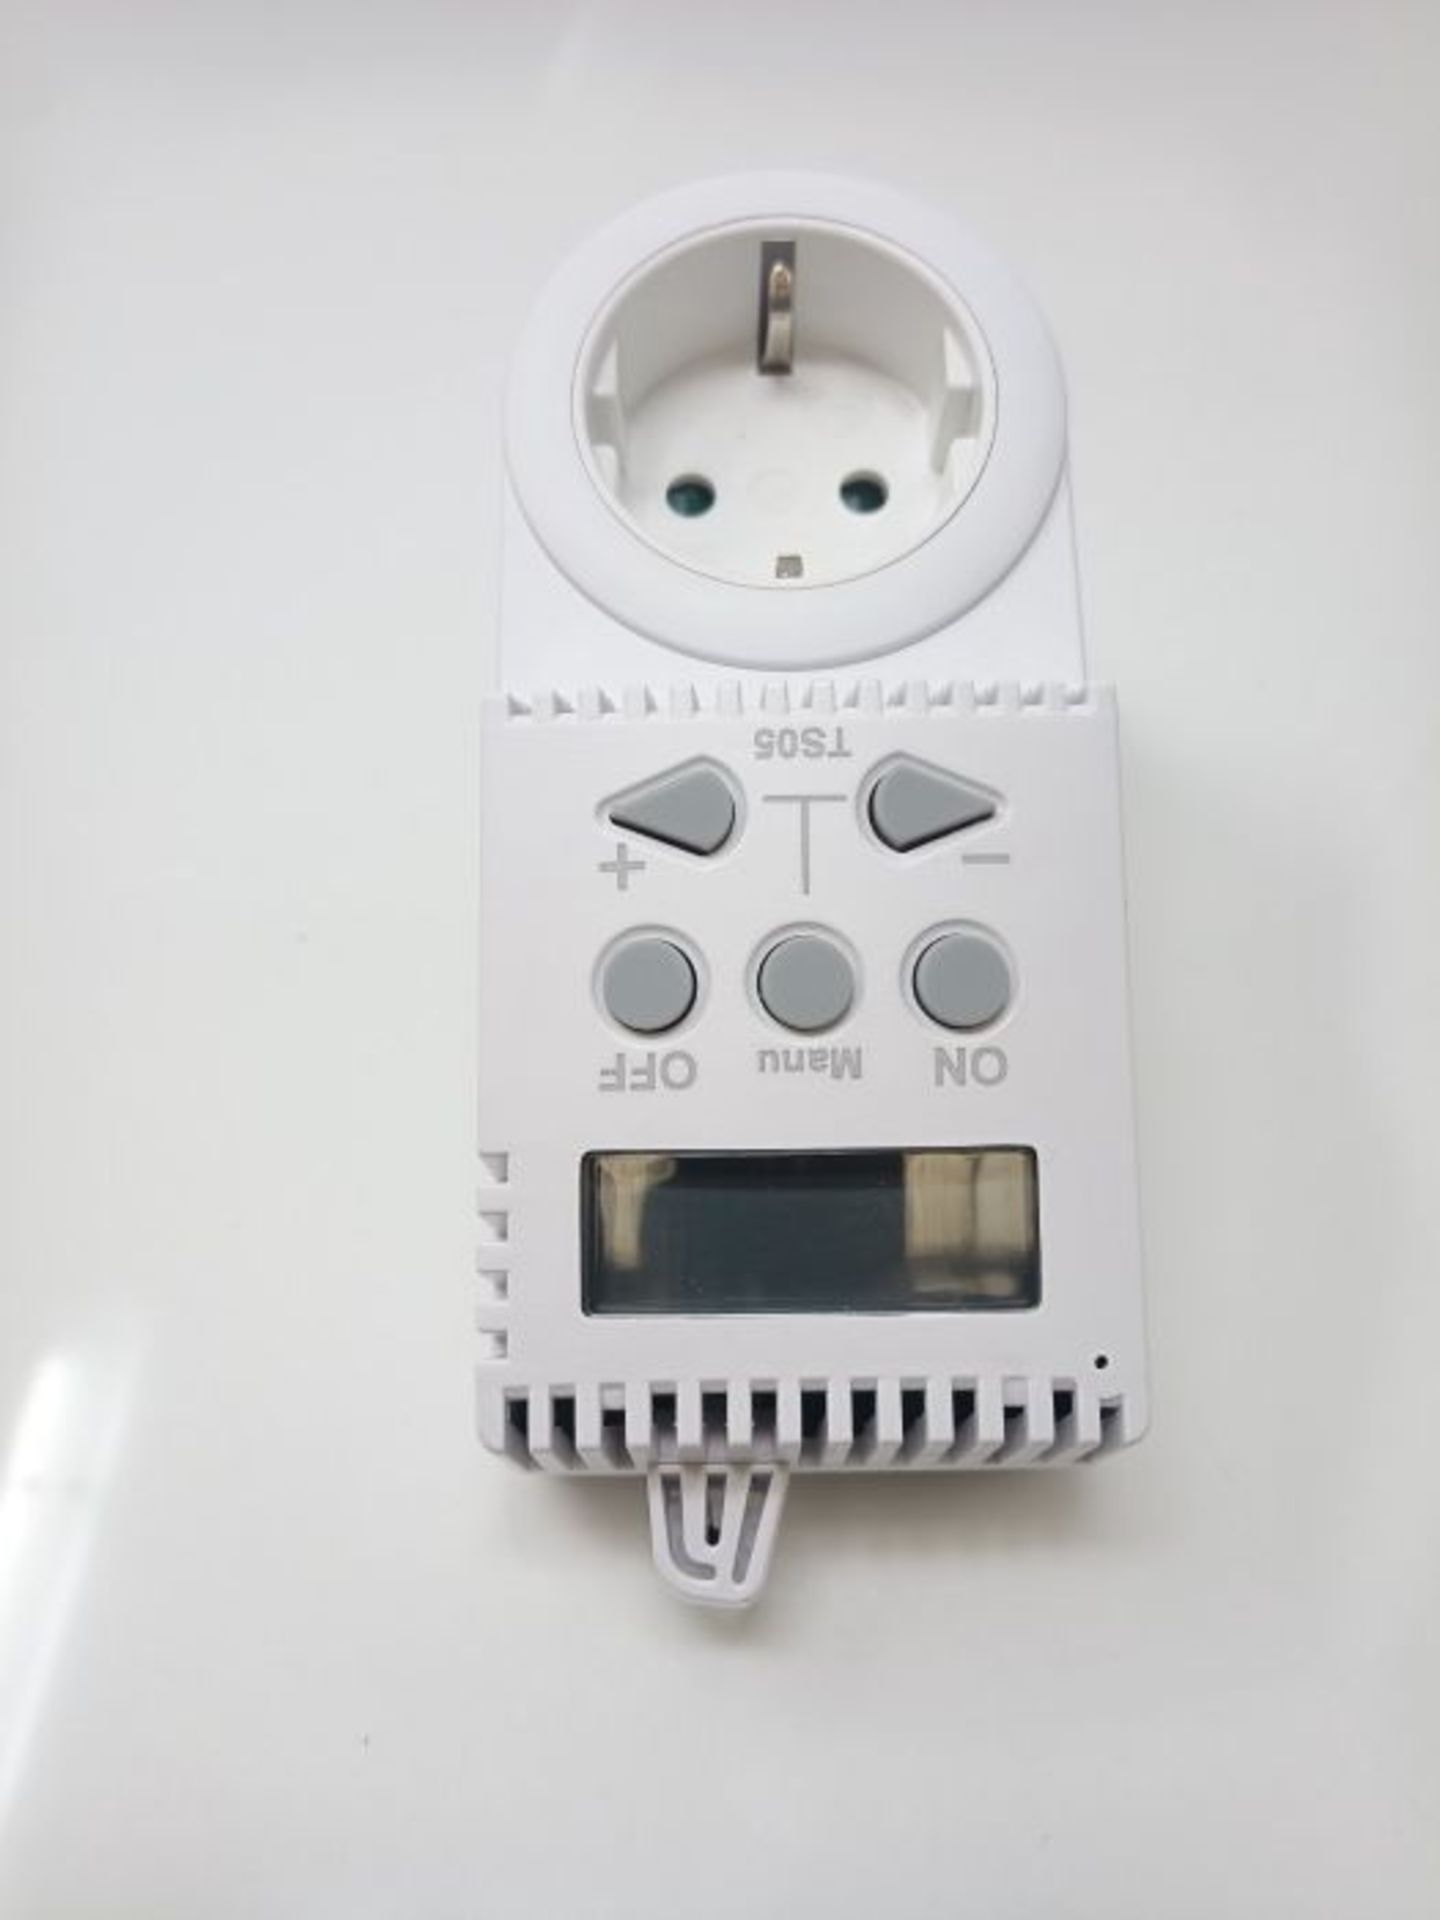 Elektrobock, Plug Thermostat TS05, Thermostat Infrared Heating. - Image 3 of 3